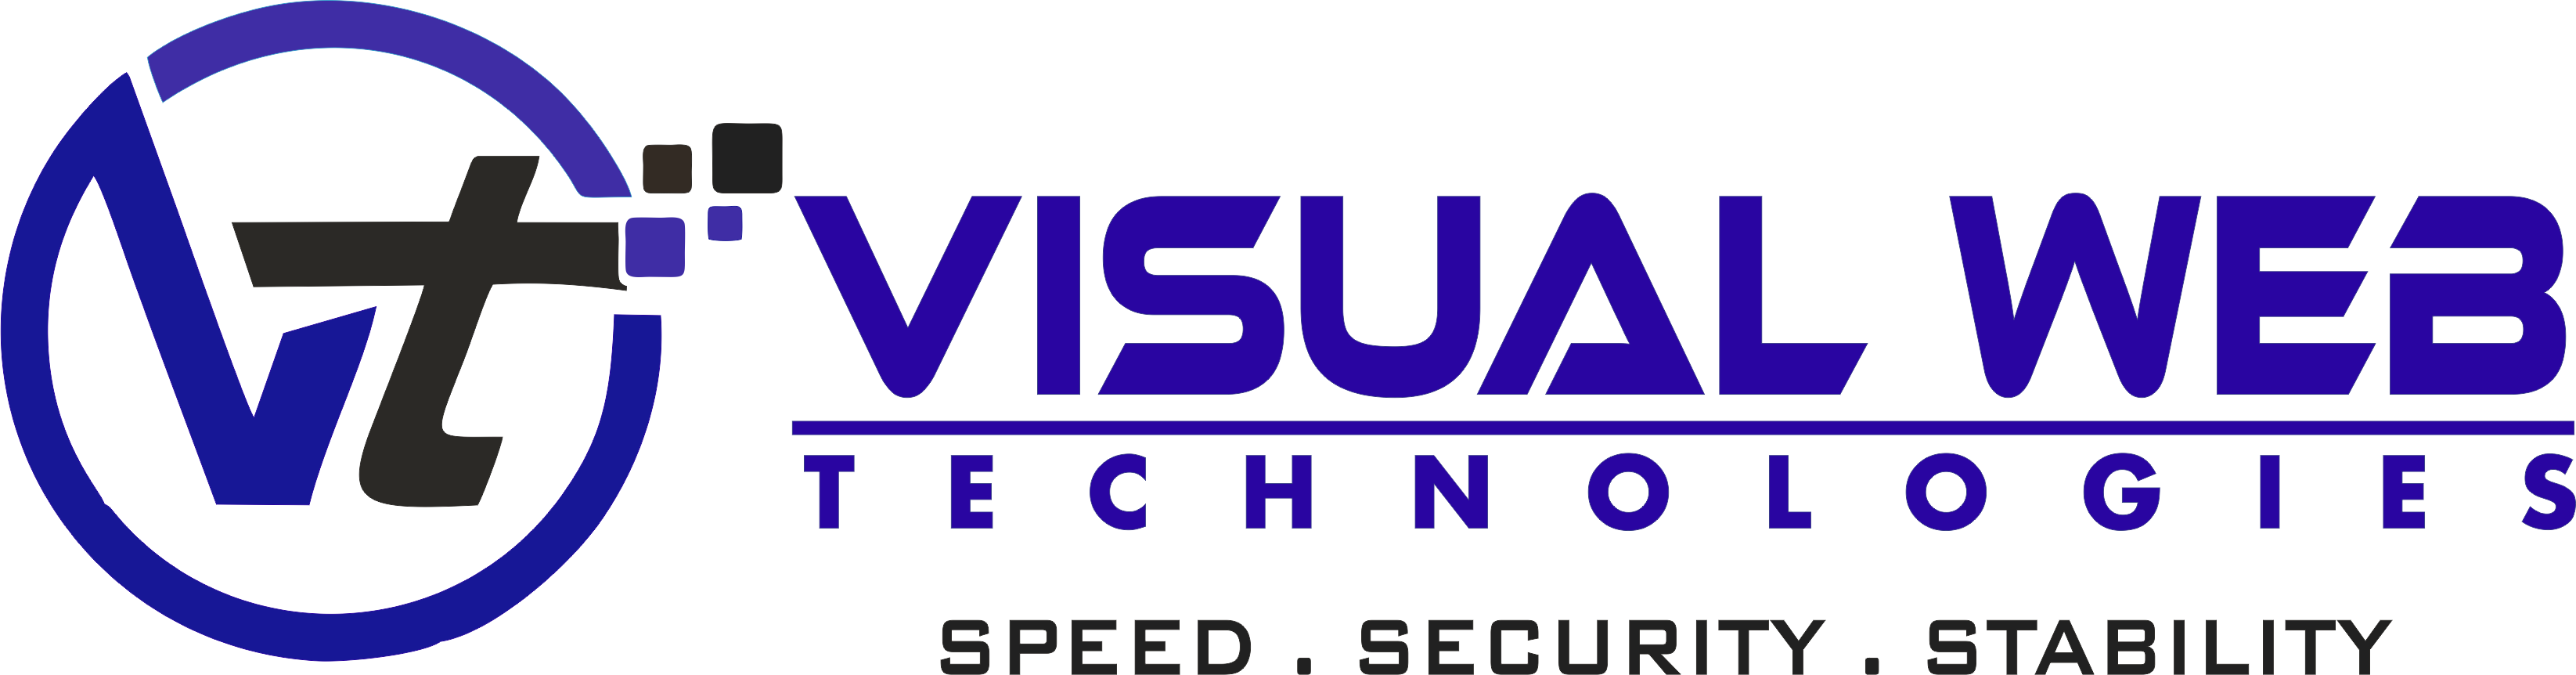 VisualWebTechnologies Logo Desaturated